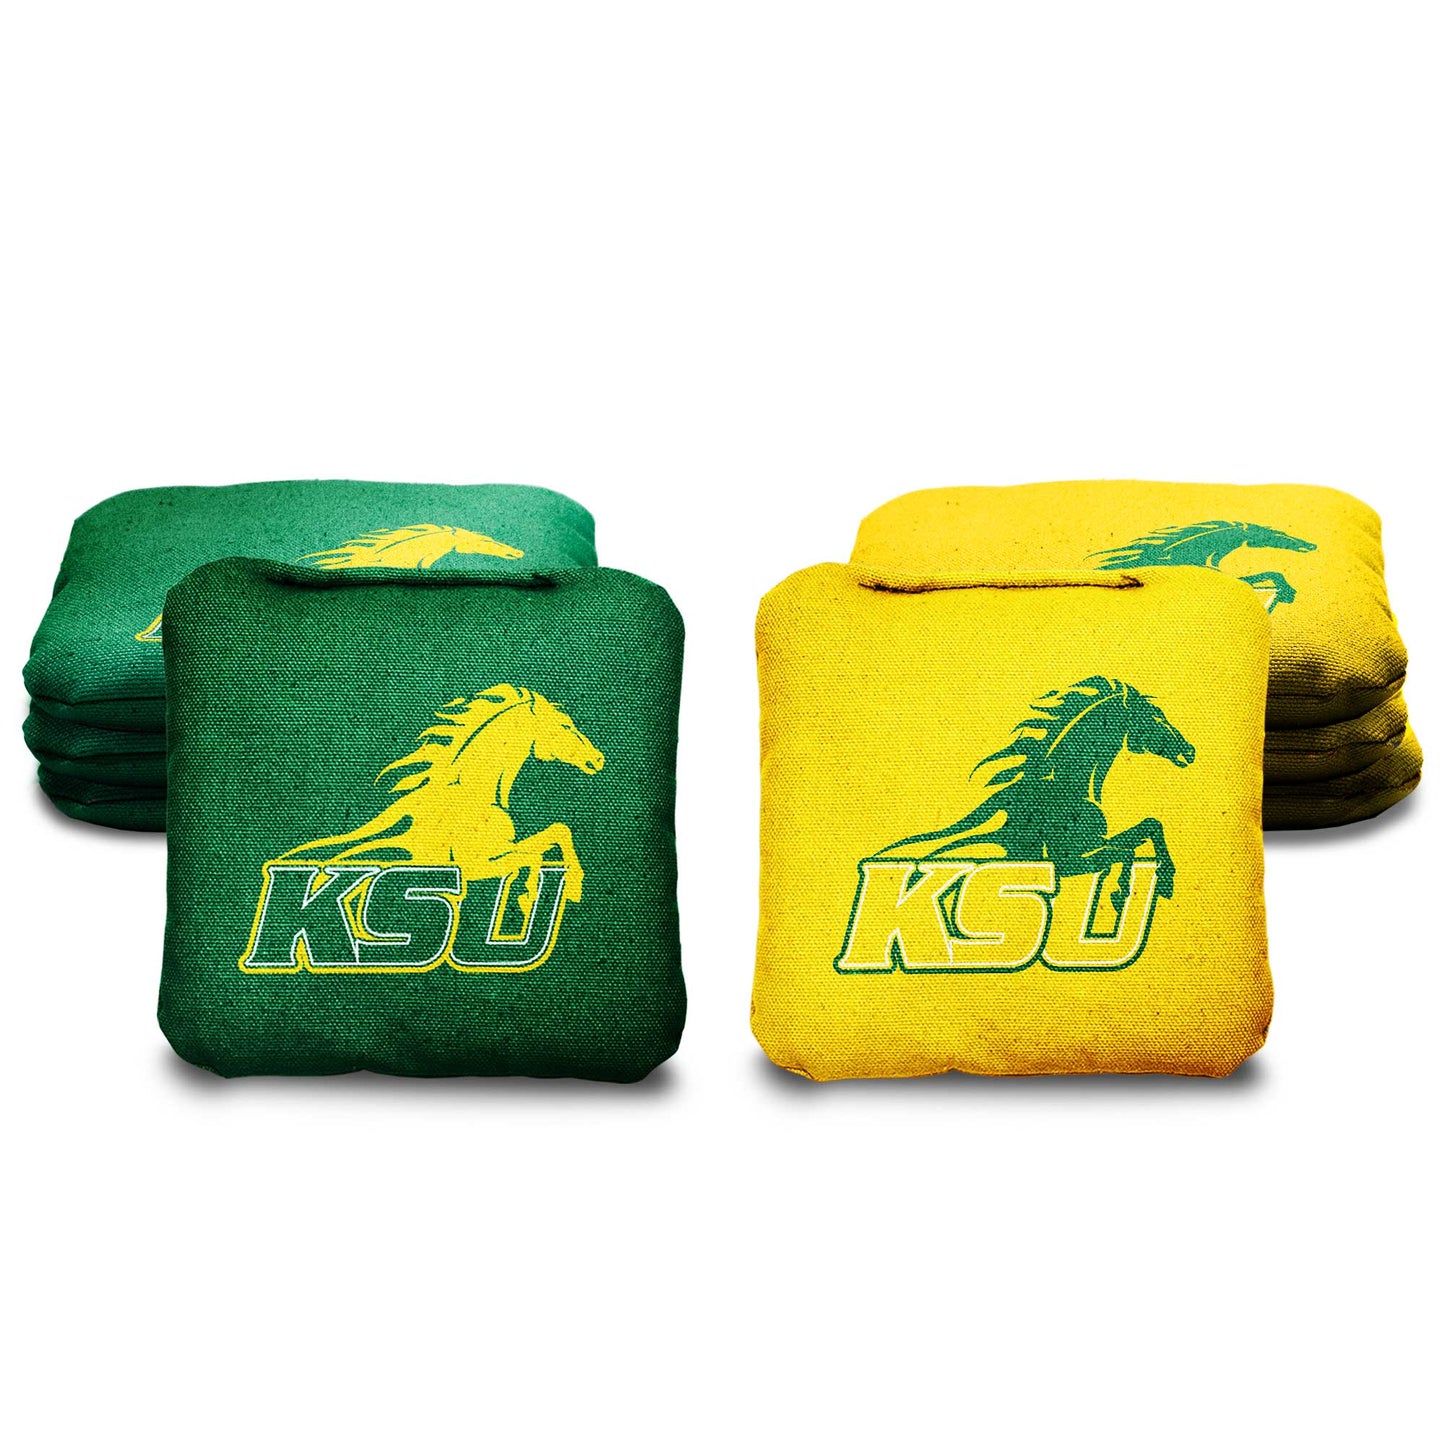 Kentucky State University Cornhole Bags - 8 Cornhole Bags